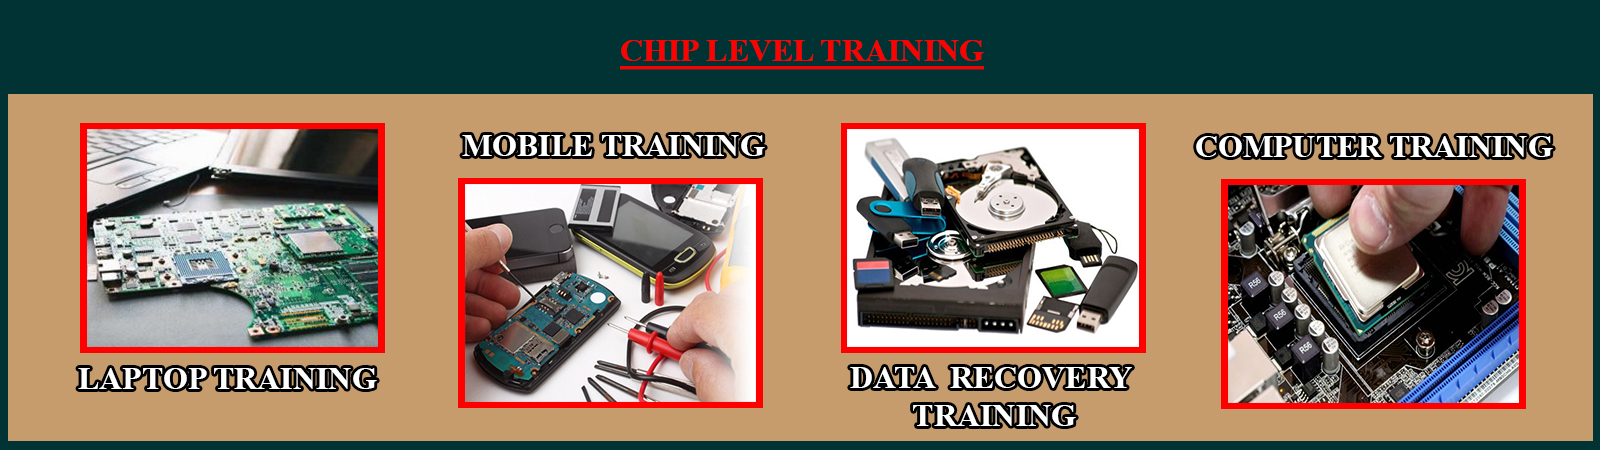 Chip level course